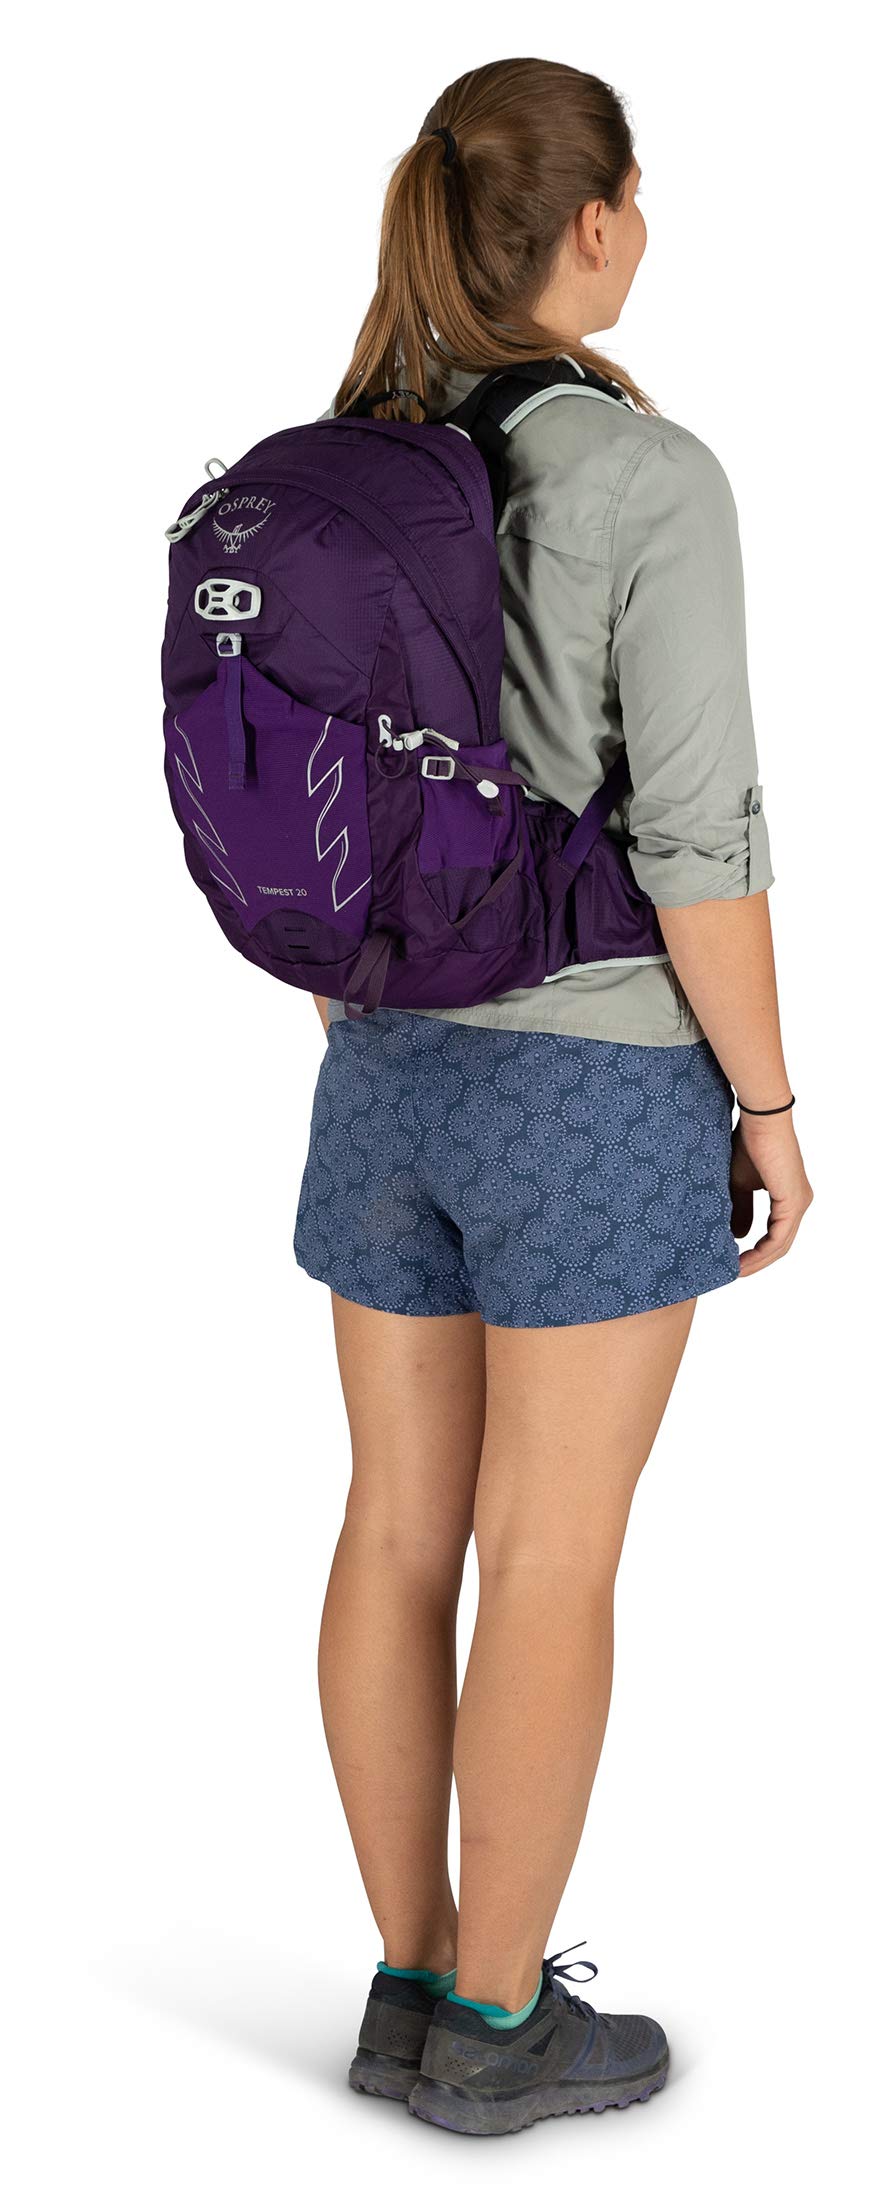 Osprey Women's Tempest 20 Hiking Backpack, Multi, WM/L Violac Purple